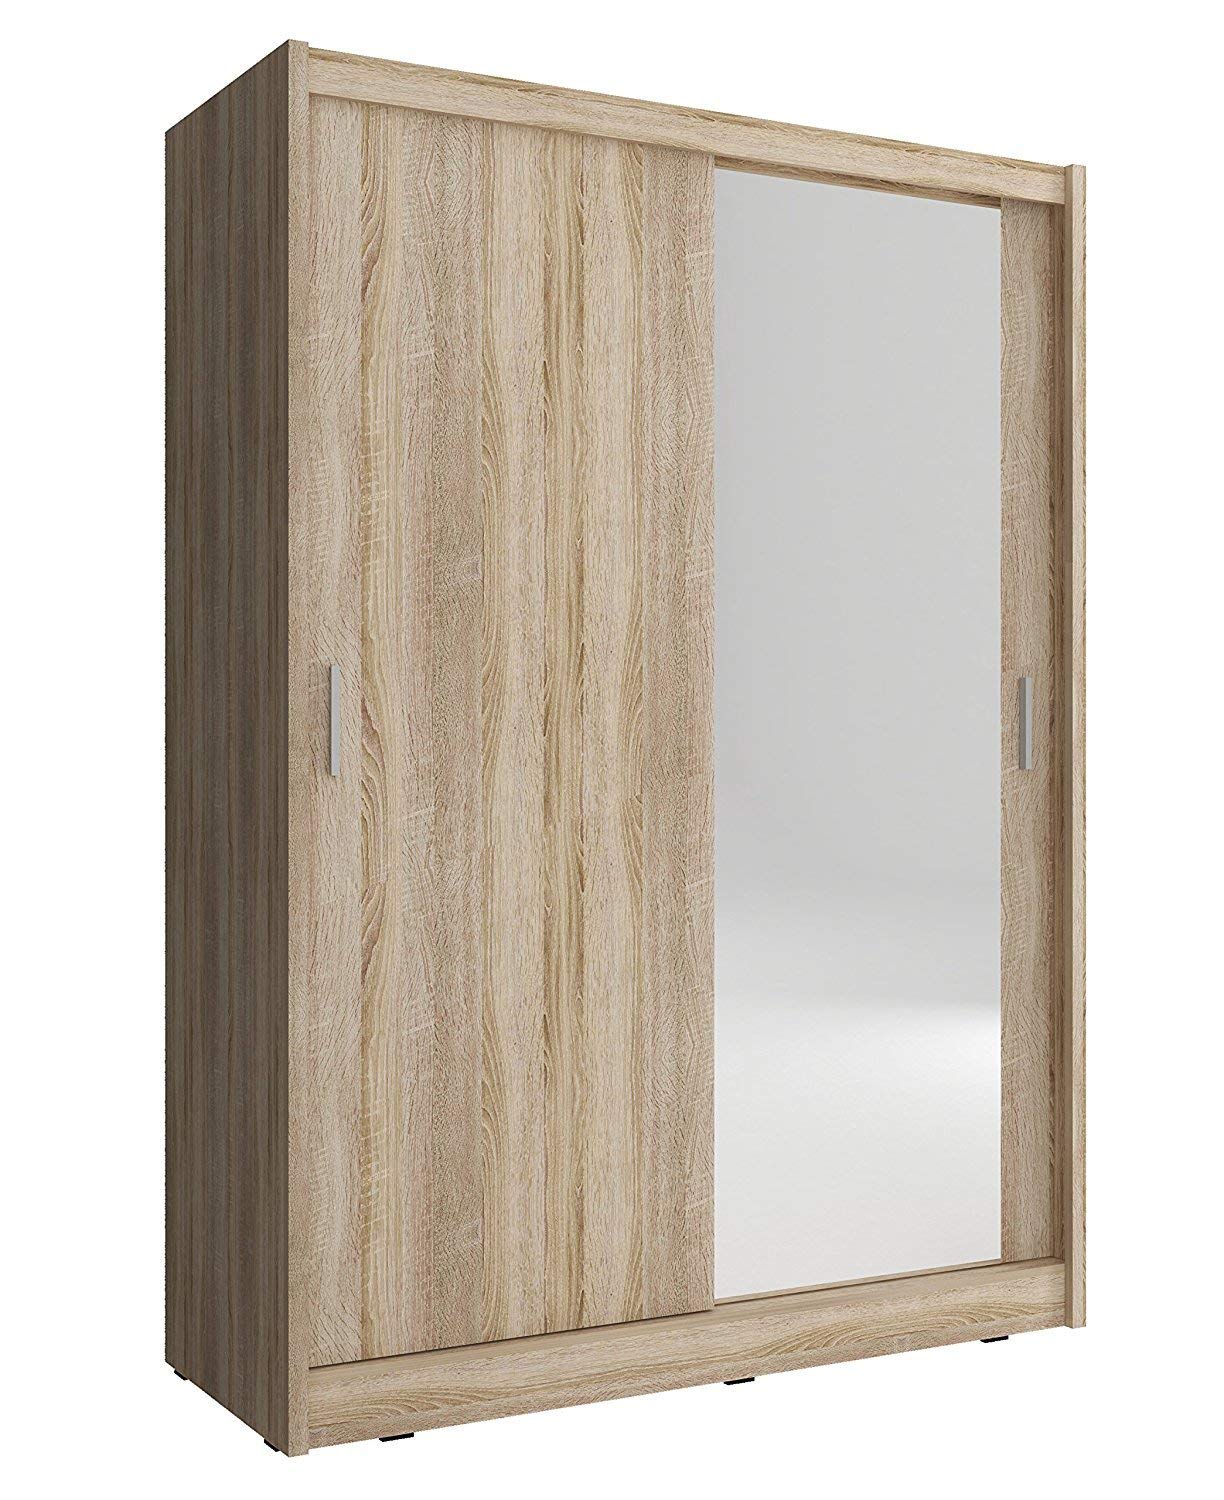  Wood Wardrobe Modern Cabinet for Bedroom